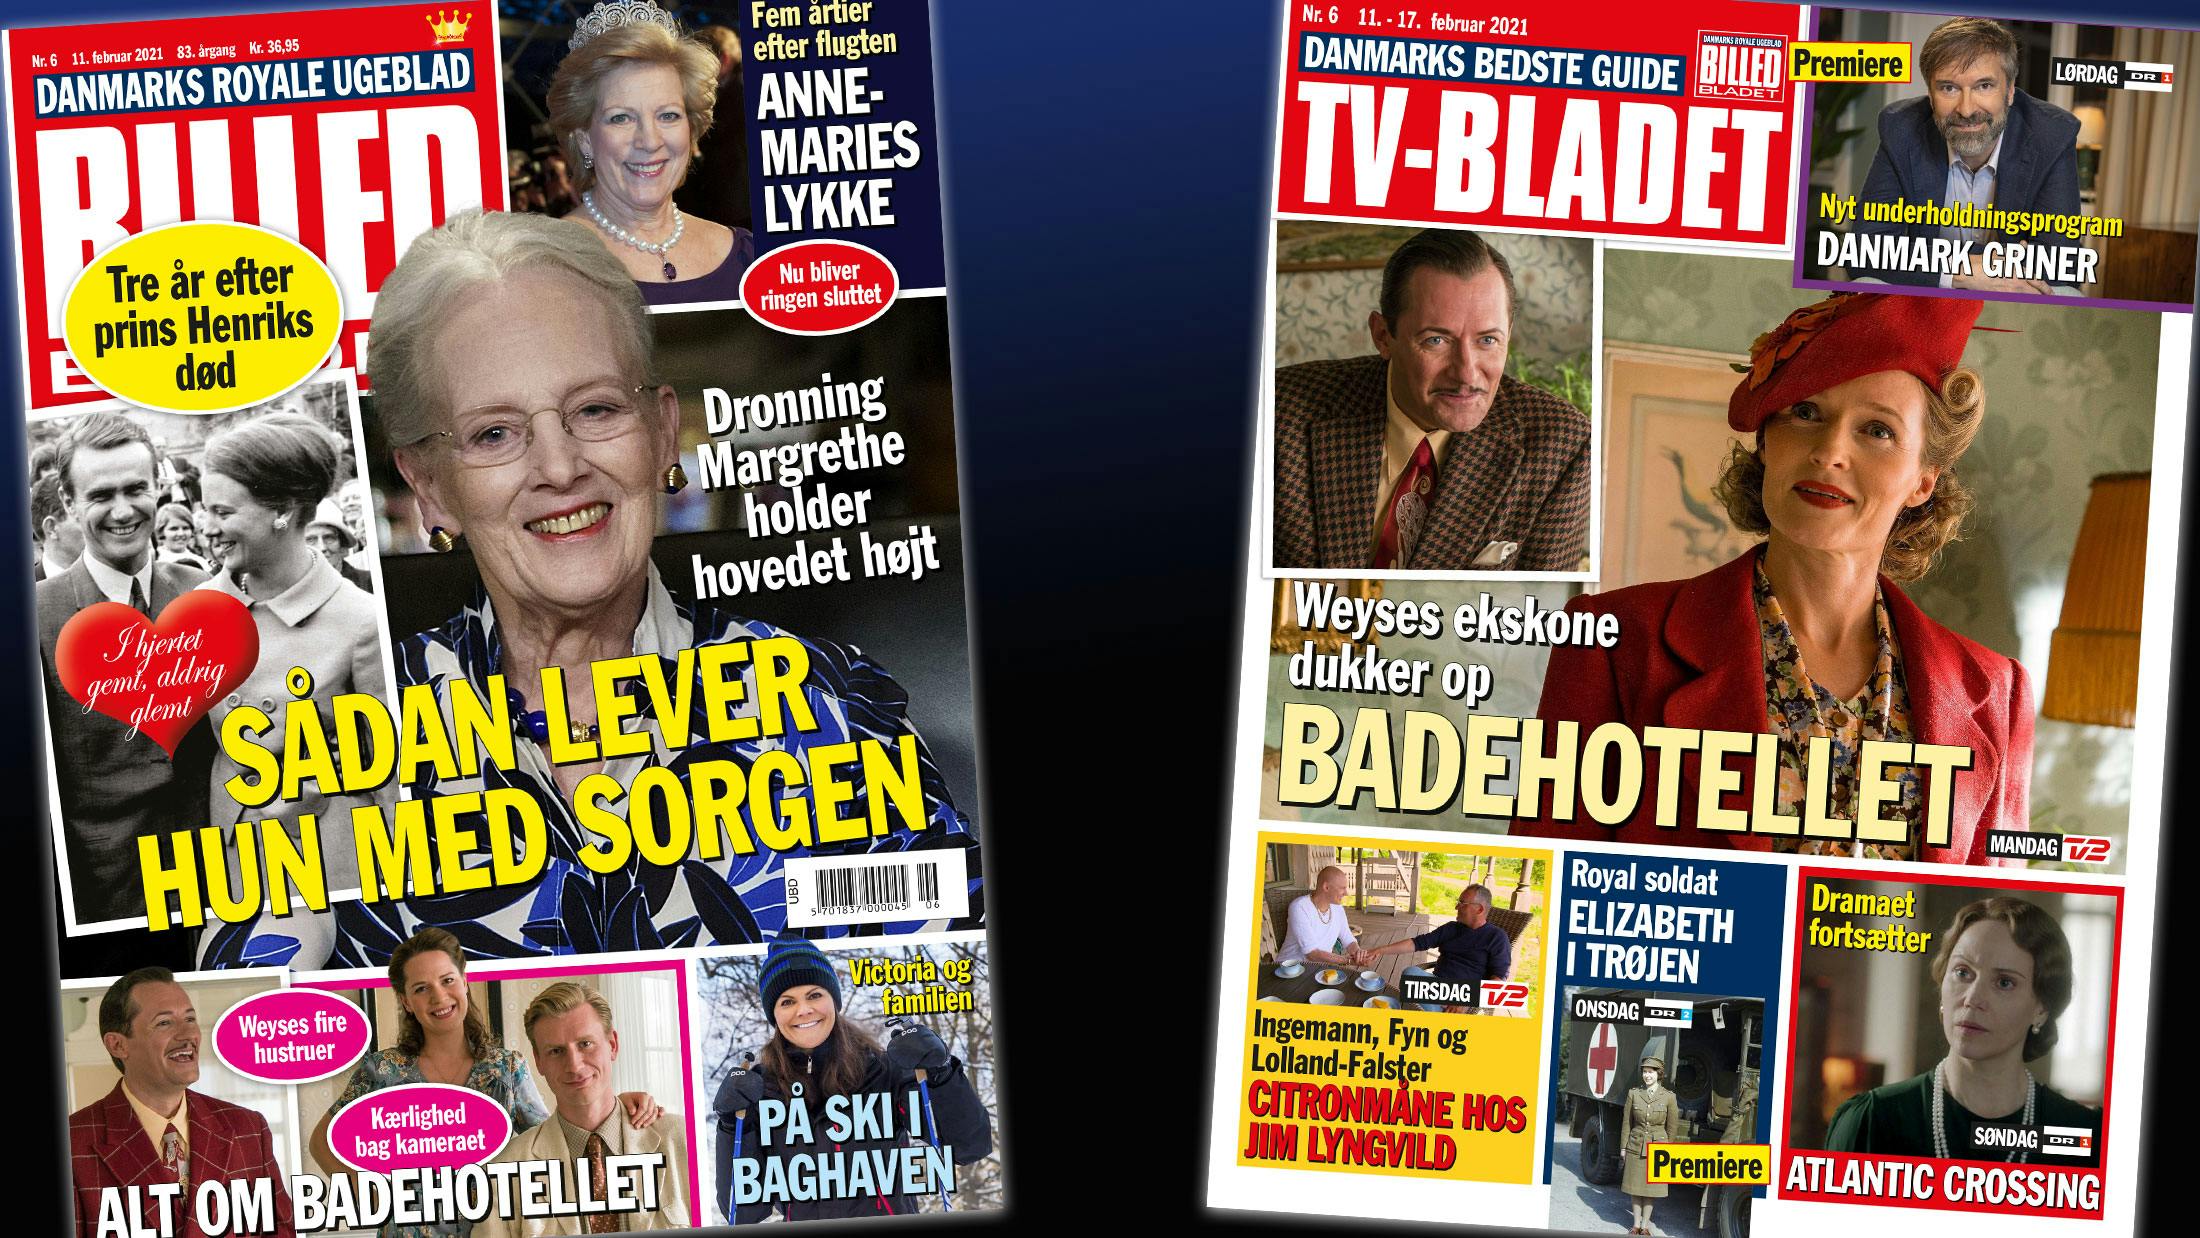 https://imgix.billedbladet.dk/media/article/webgrafik_bb06-forsider.jpg